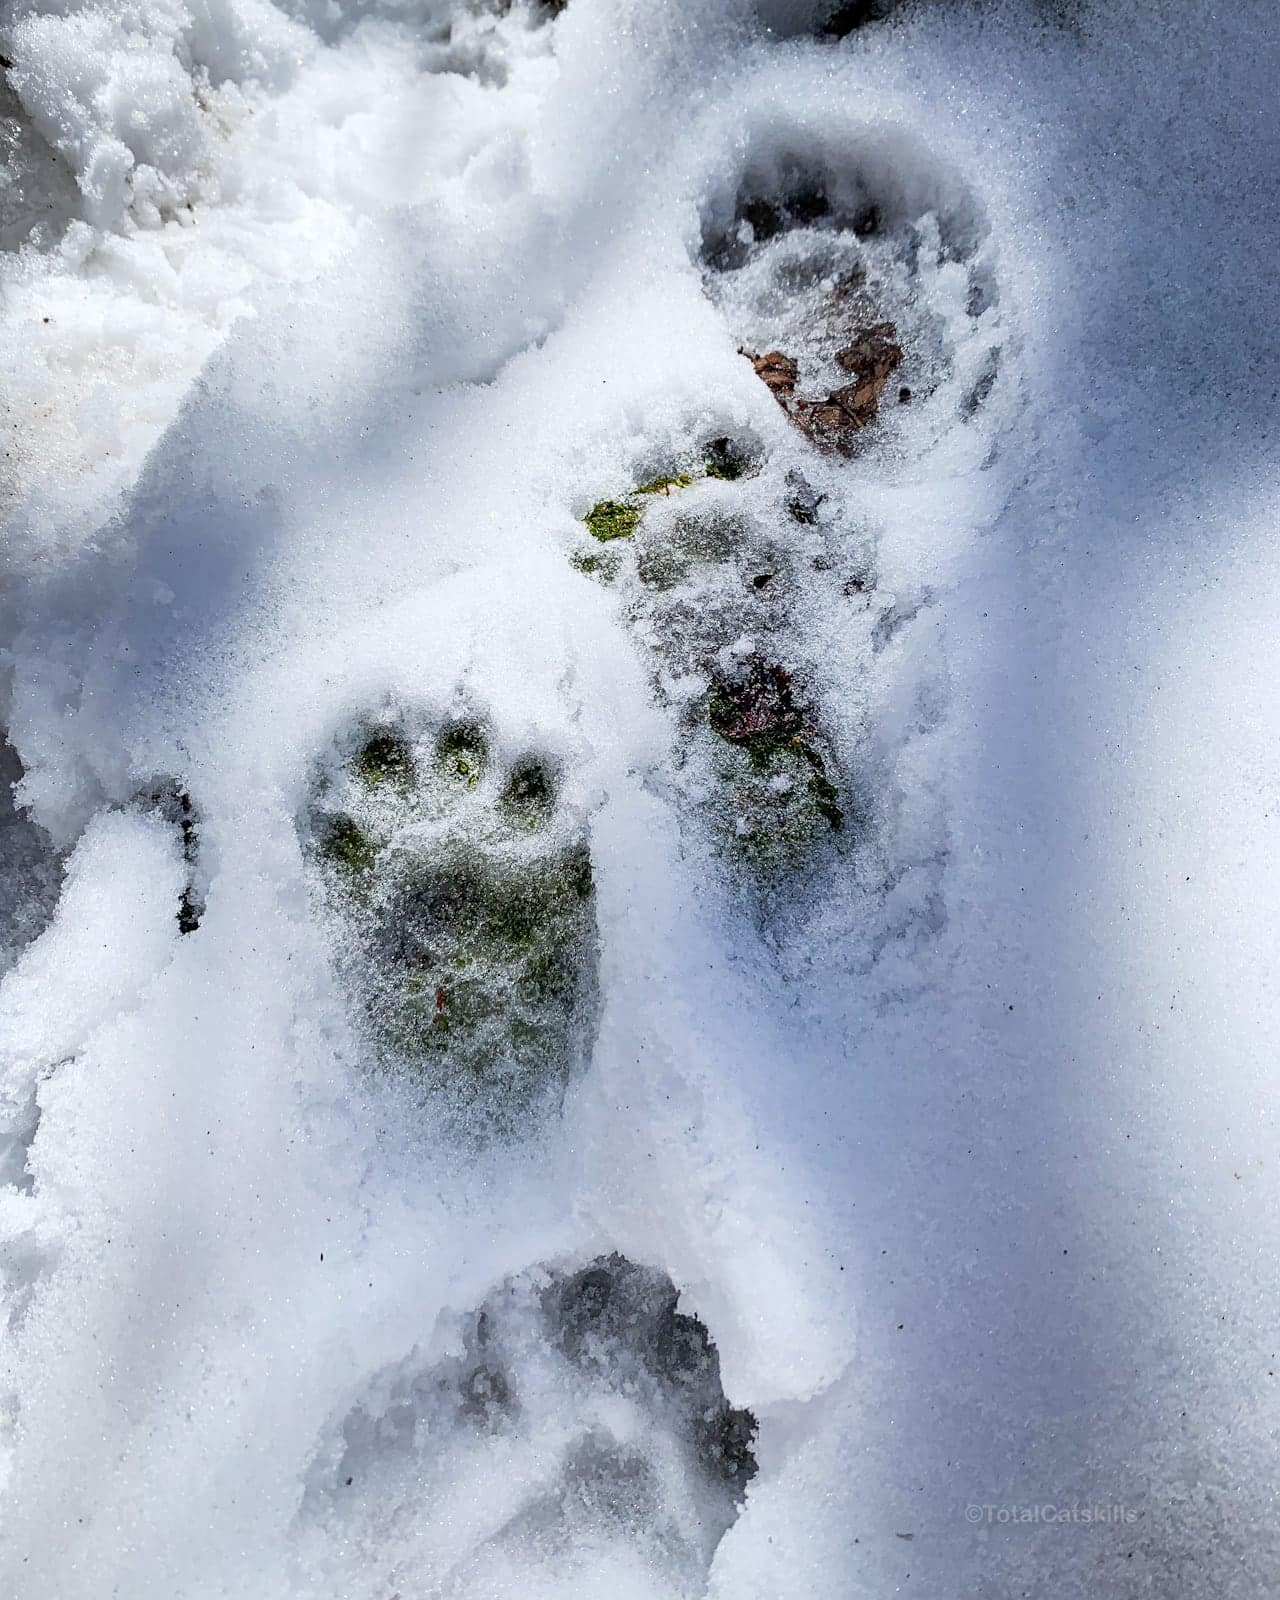 black bear cub prints in snow